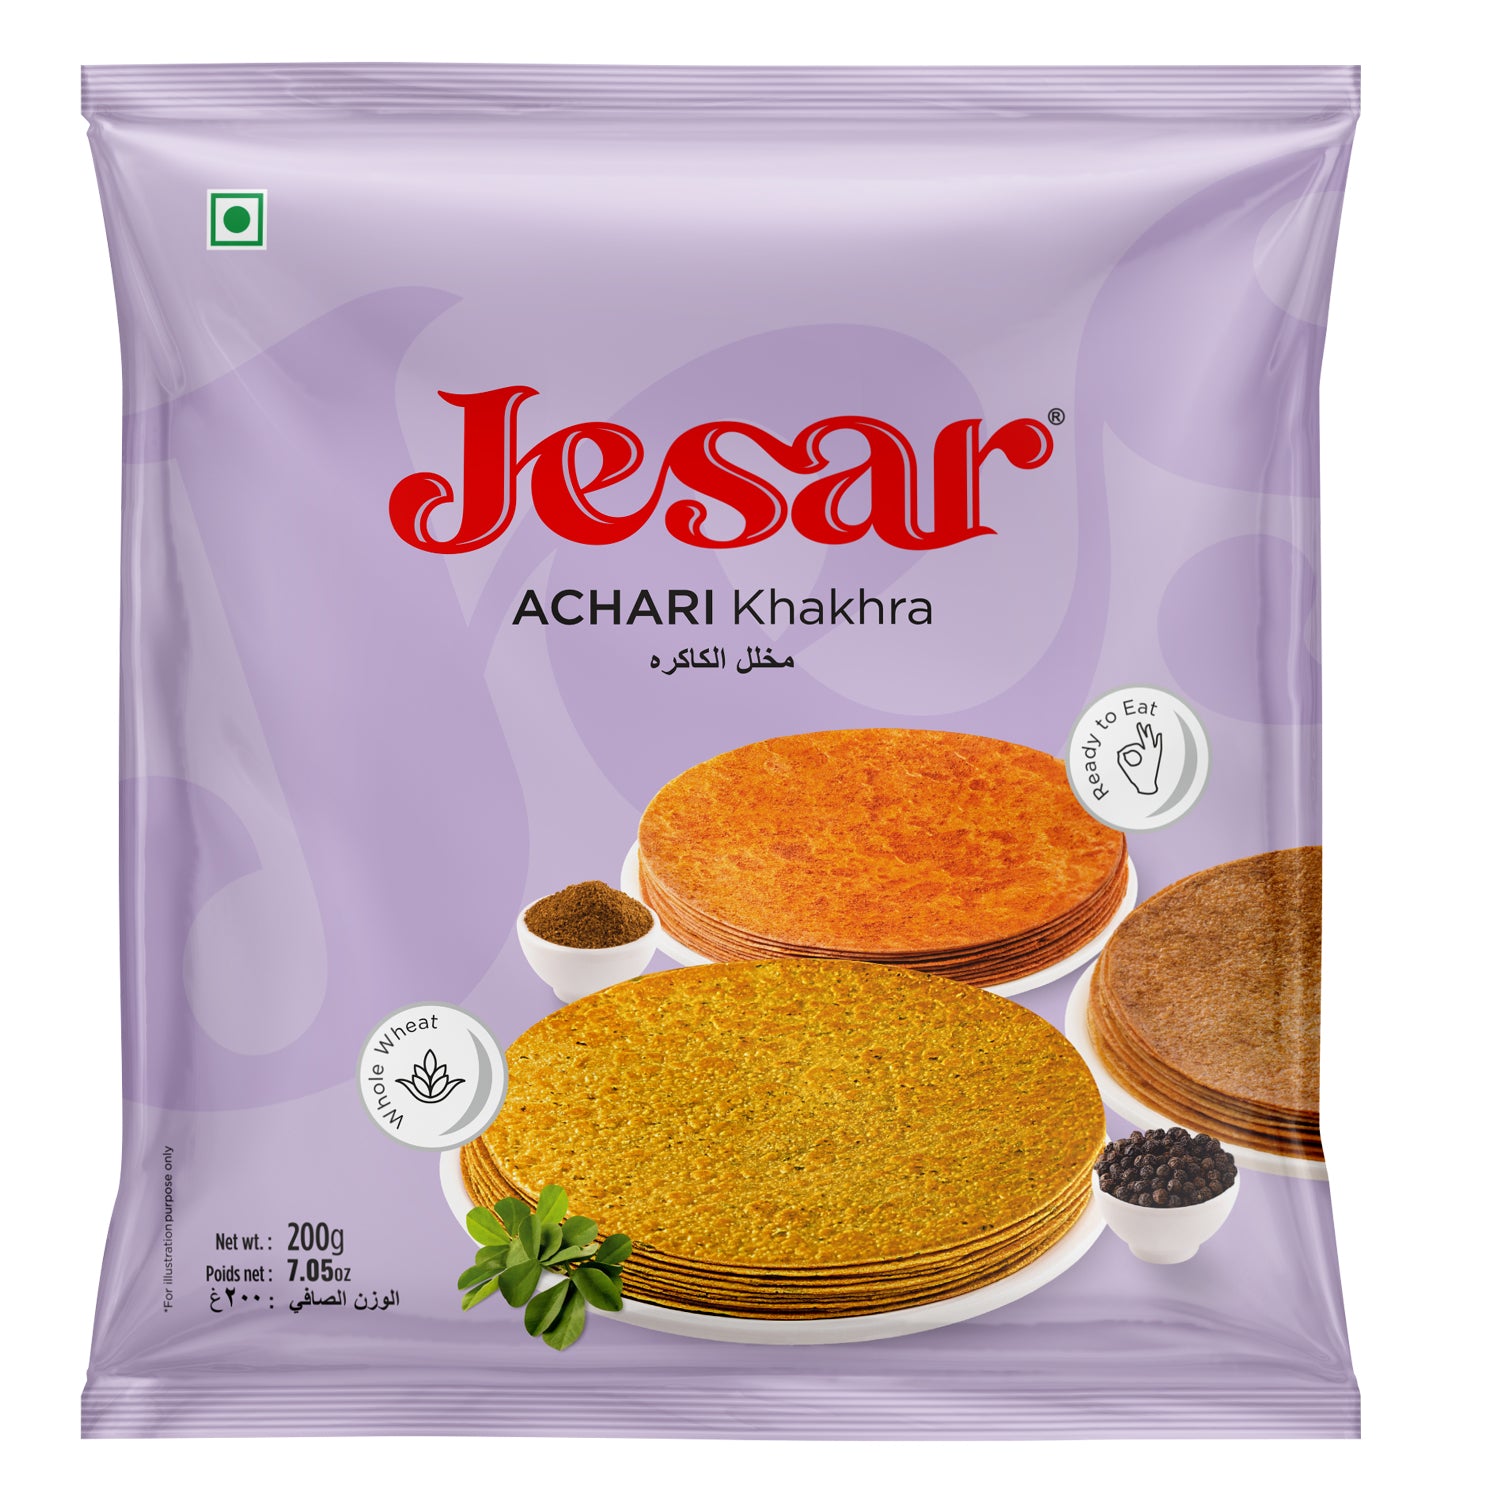 Jesar Namkeen Snacks Combo Achari Khakhra 200g -2 Pkt And BhakhriToz With Mix Pickle and Gorkeri chutney 55g - 2 Pkt